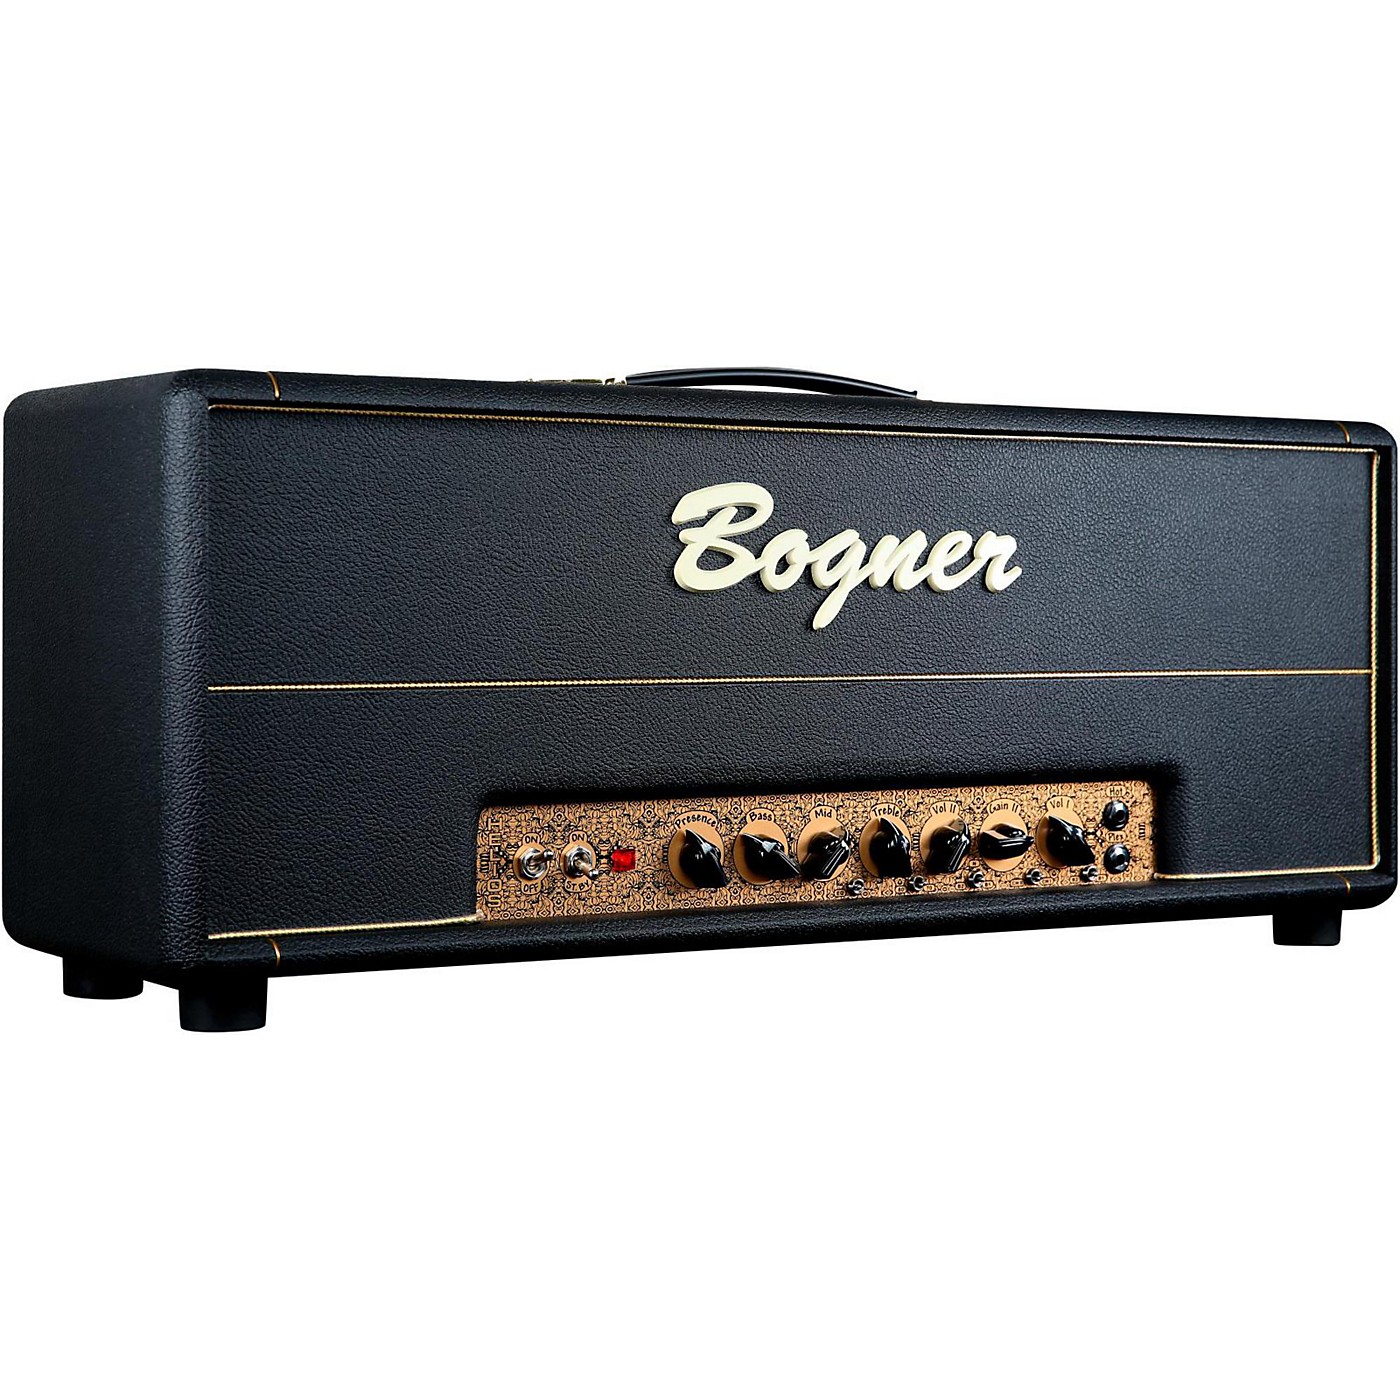 Bogner Helios 50W Tube Guitar Amp Head thumbnail